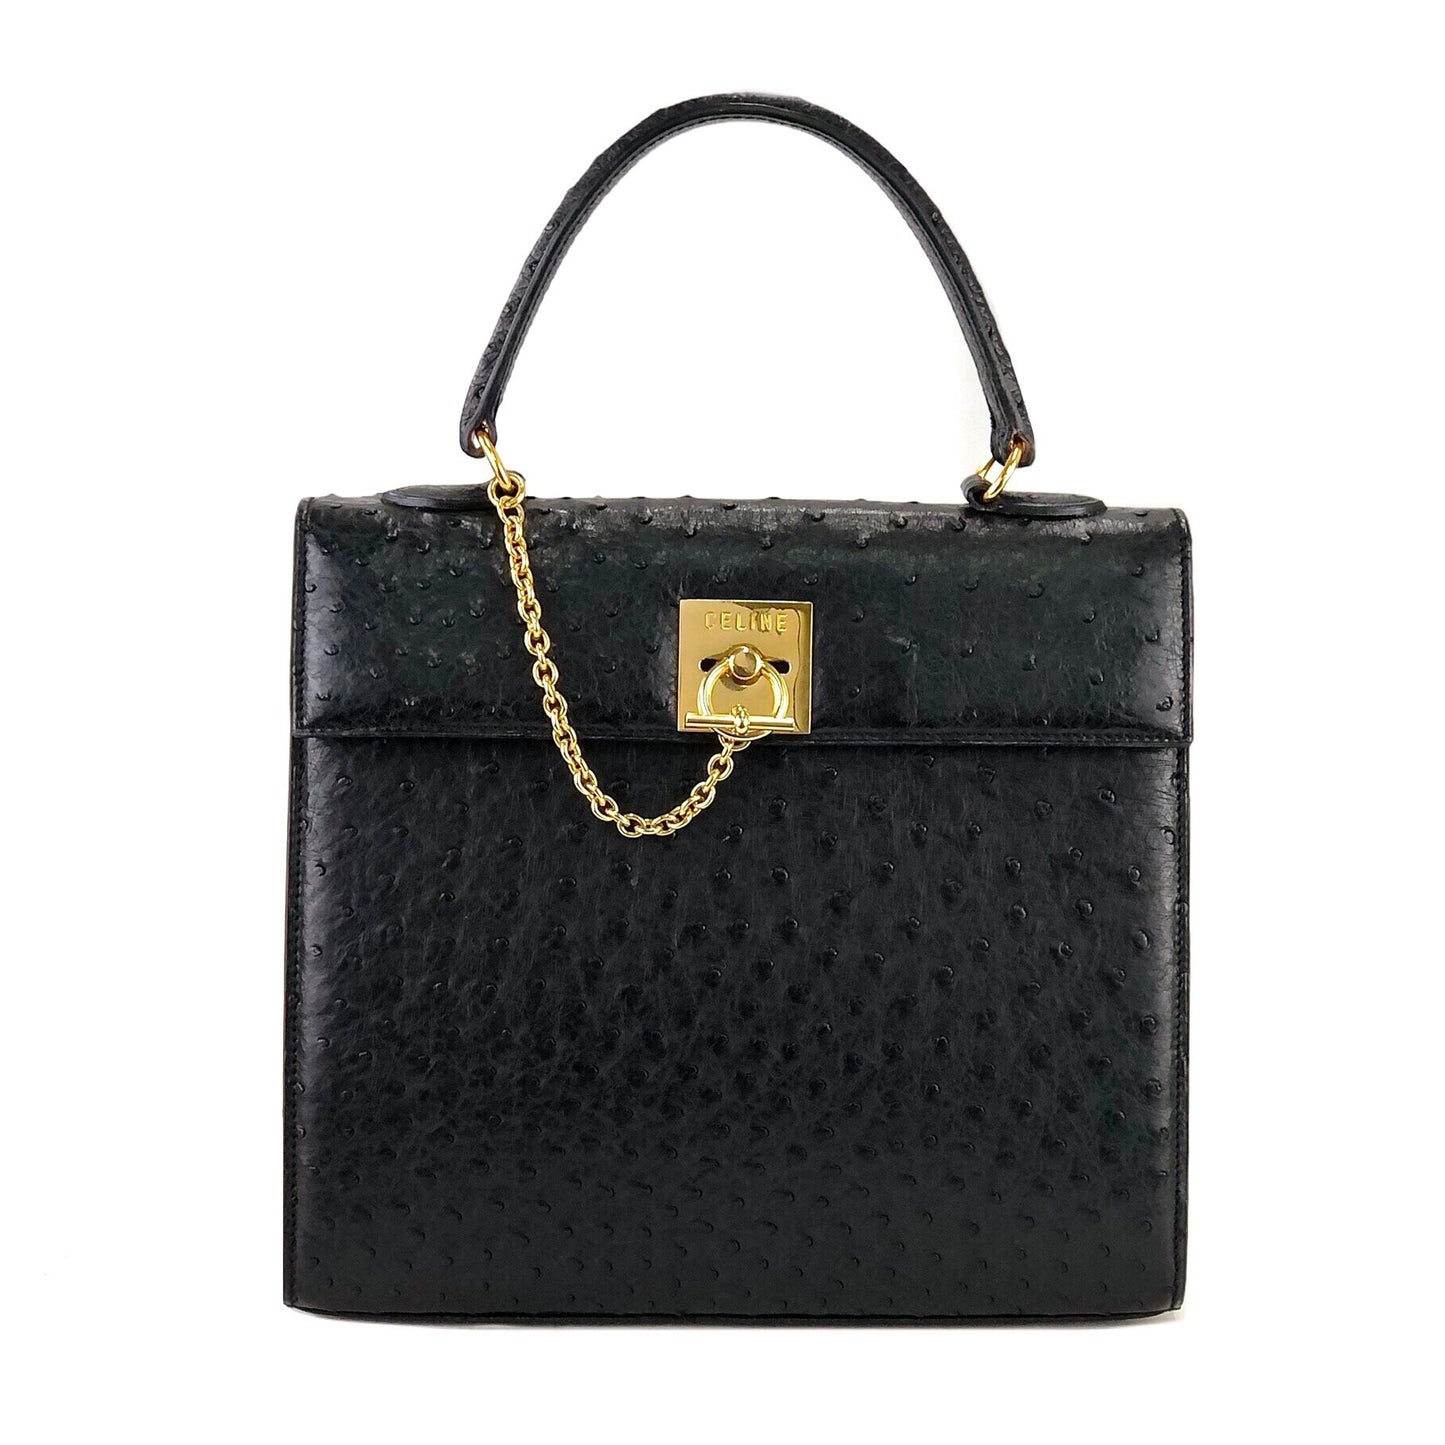 CELINE Mantel Chain Gancini Ostrich Leather Kelly Handbag Black Vintag –  VintageShop solo